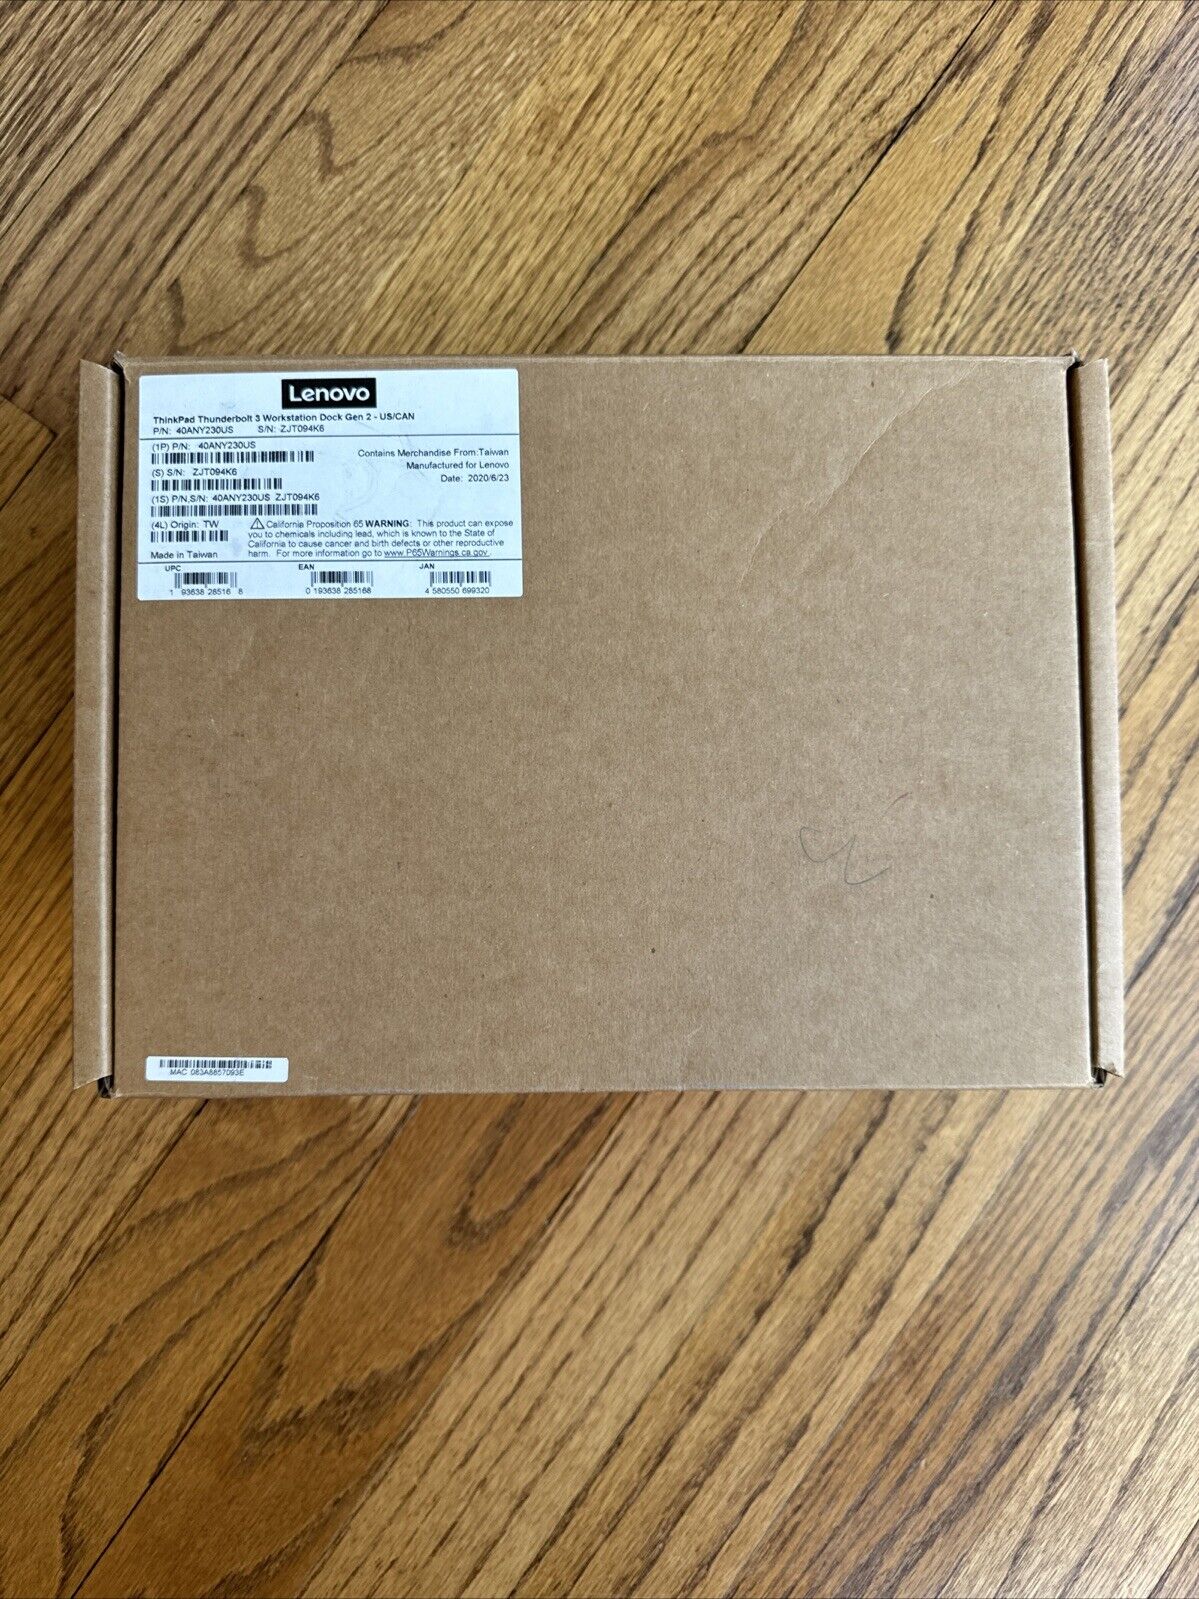 Lenovo ThinkPad Thunderbolt 3 Workstation Dock Gen 2 40ANY230US New Sealed